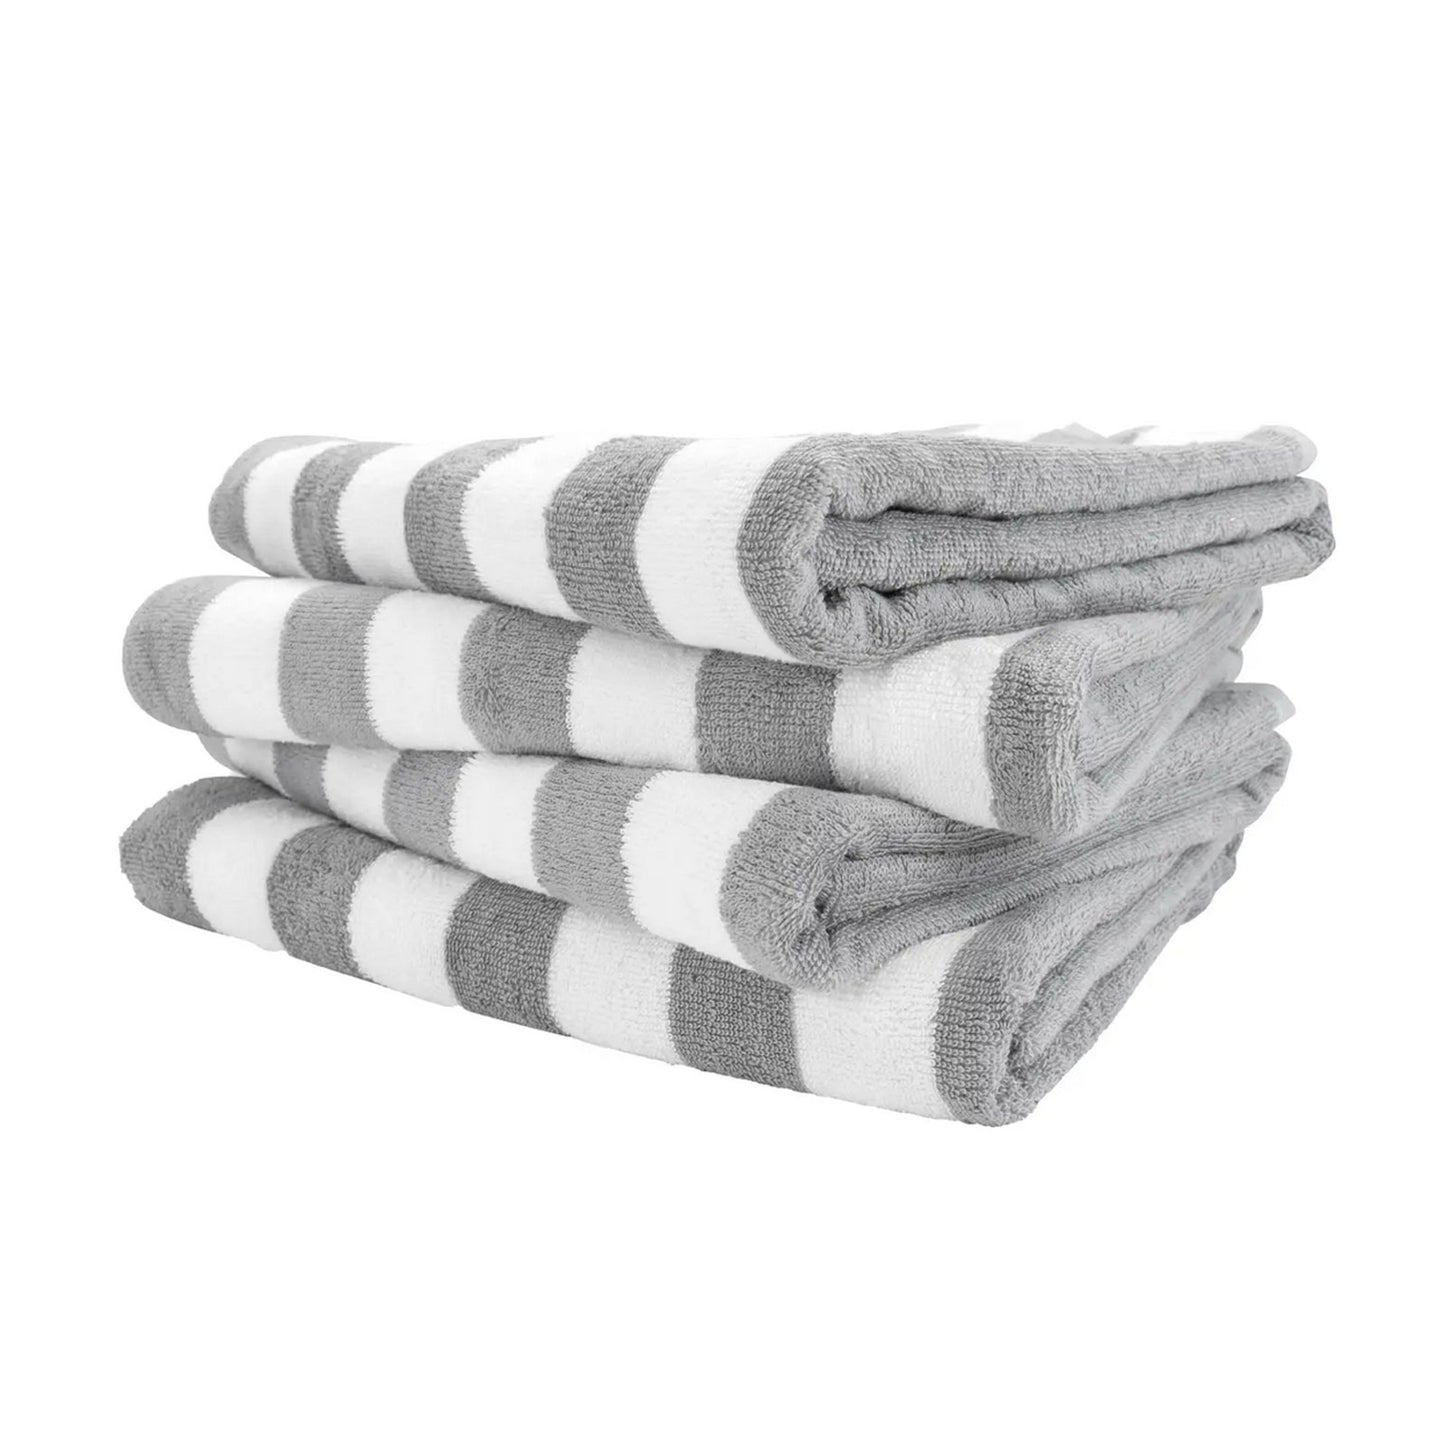 Cotton Cabana Beach Towel, Light Gray Stripe, Set of 4